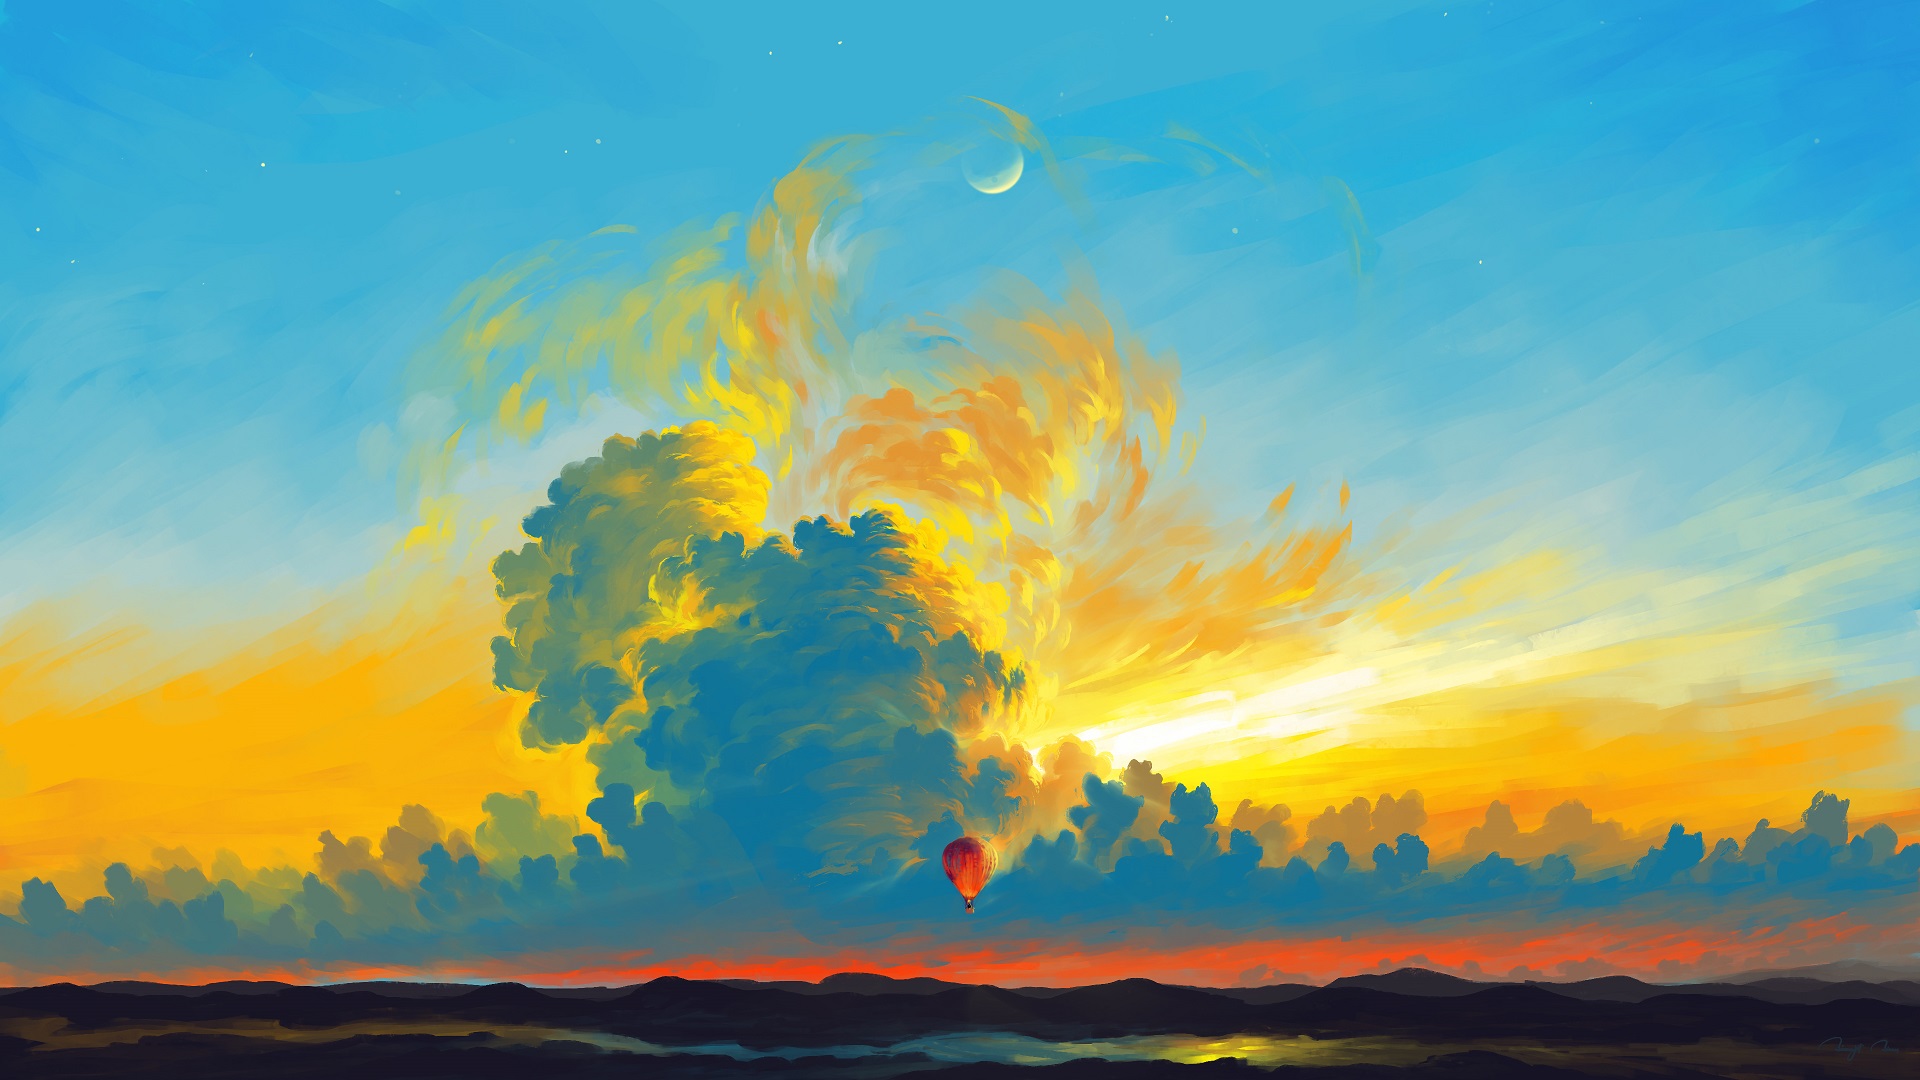 General 1920x1080 BisBiswas digital art illustration artwork landscape clouds hot air balloons mountains sky Moon